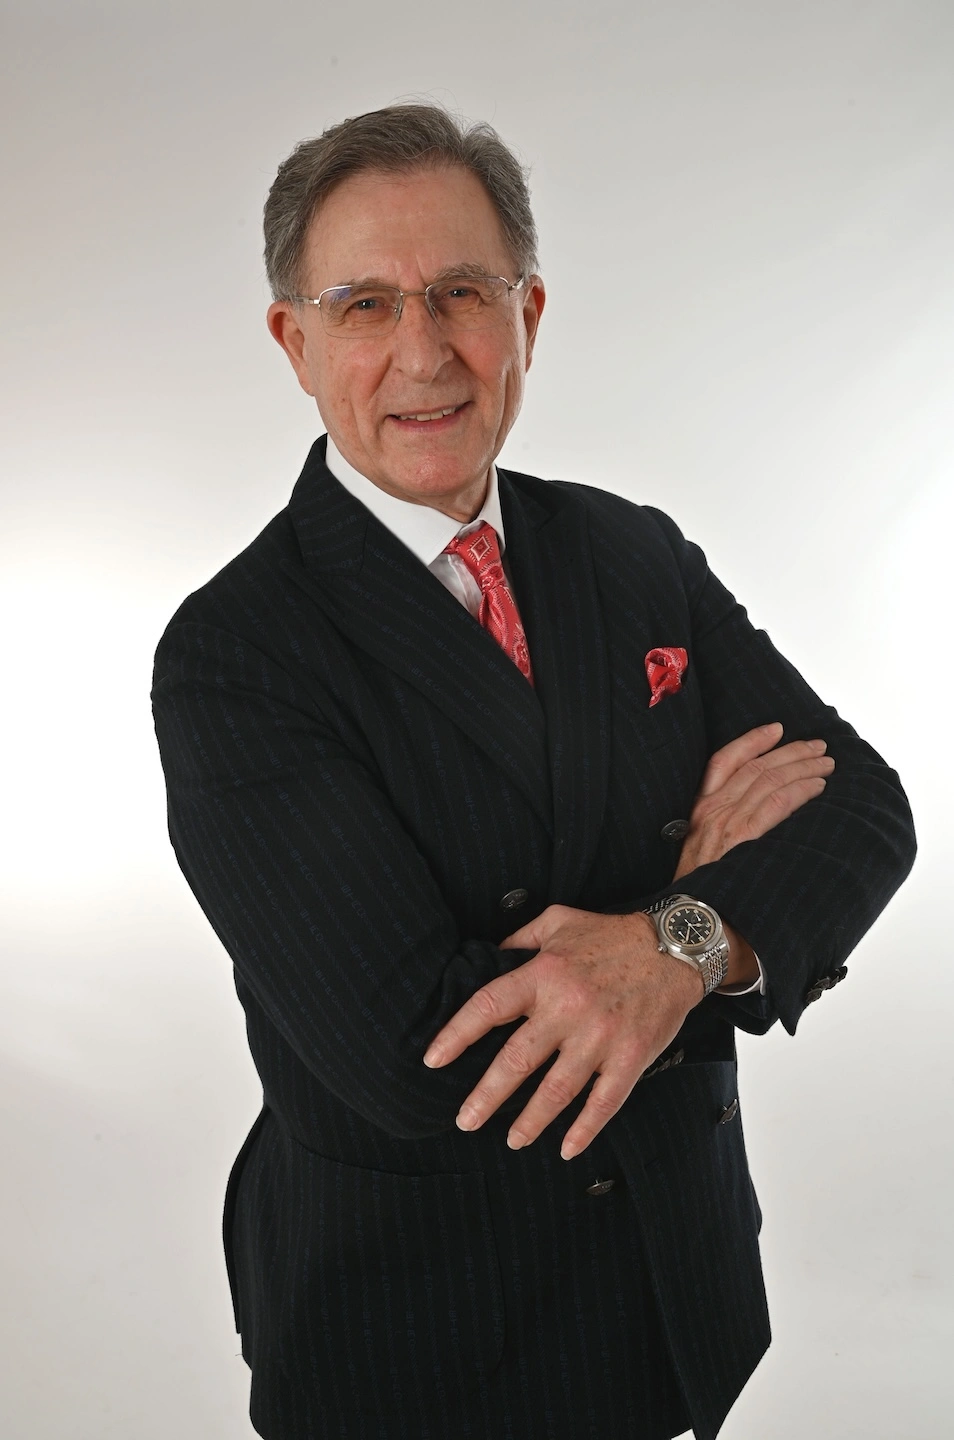 Professor Dr. Bertagnoli